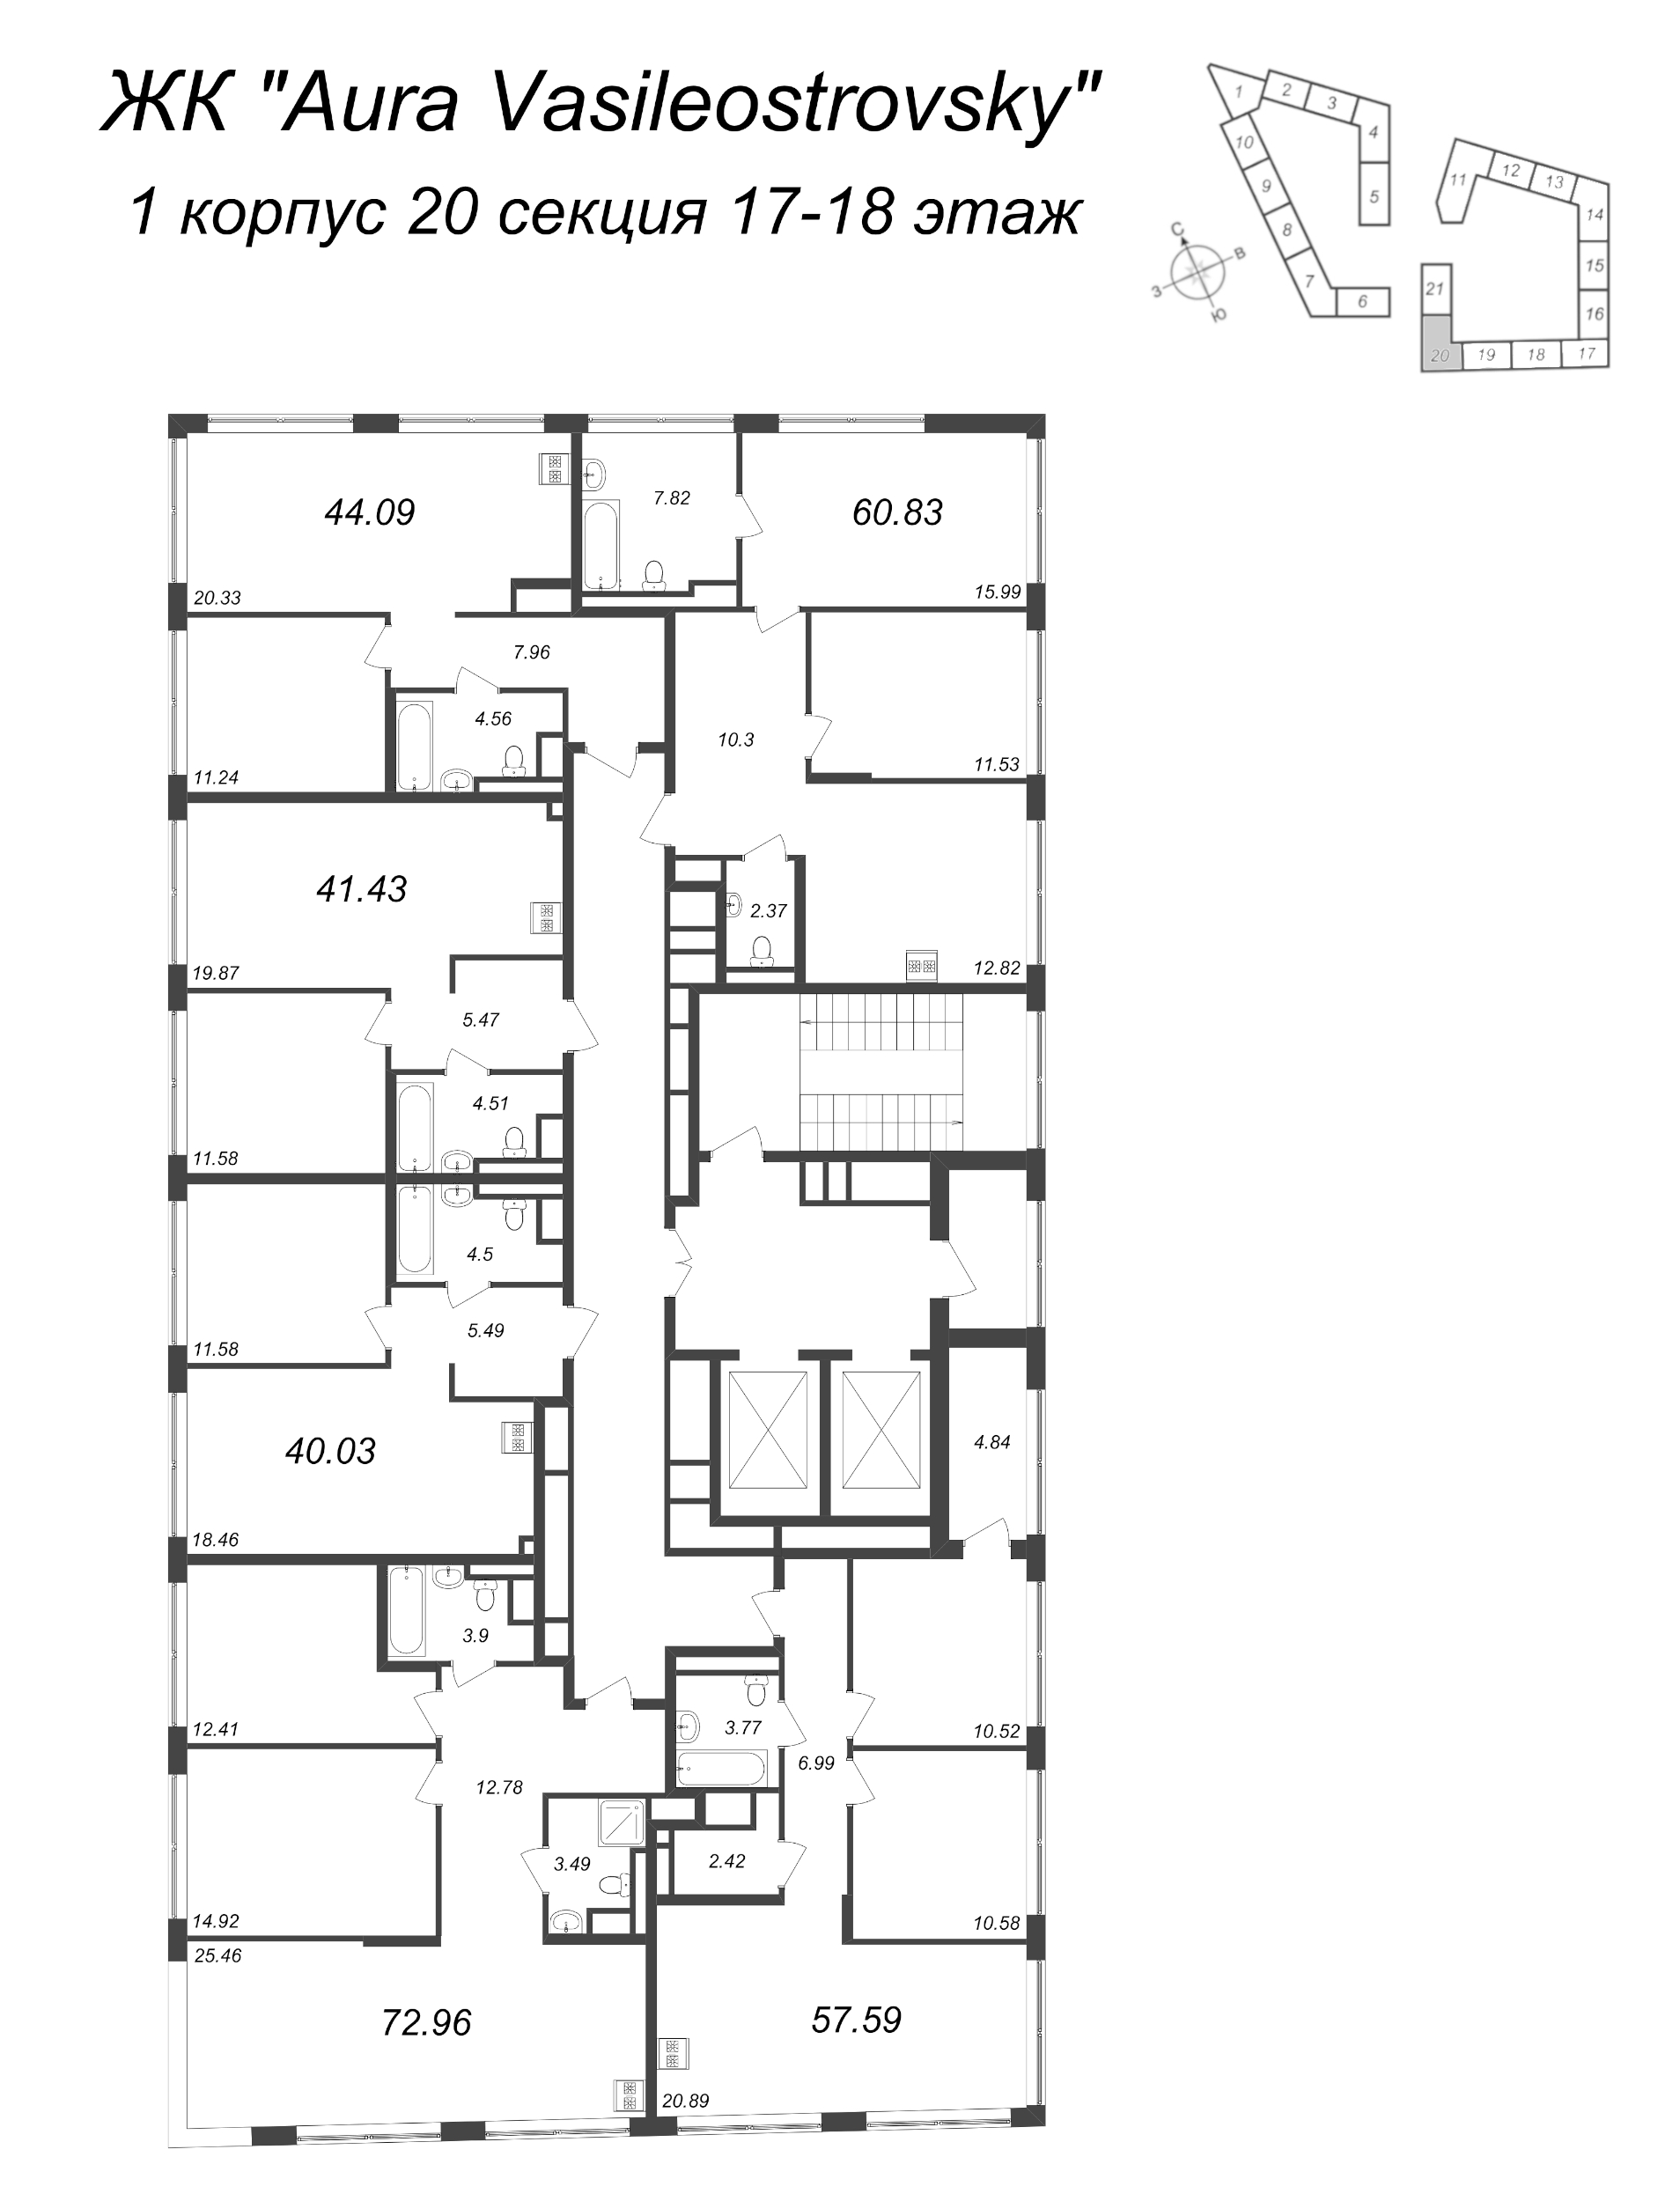 3-комнатная (Евро) квартира, 57.59 м² - планировка этажа